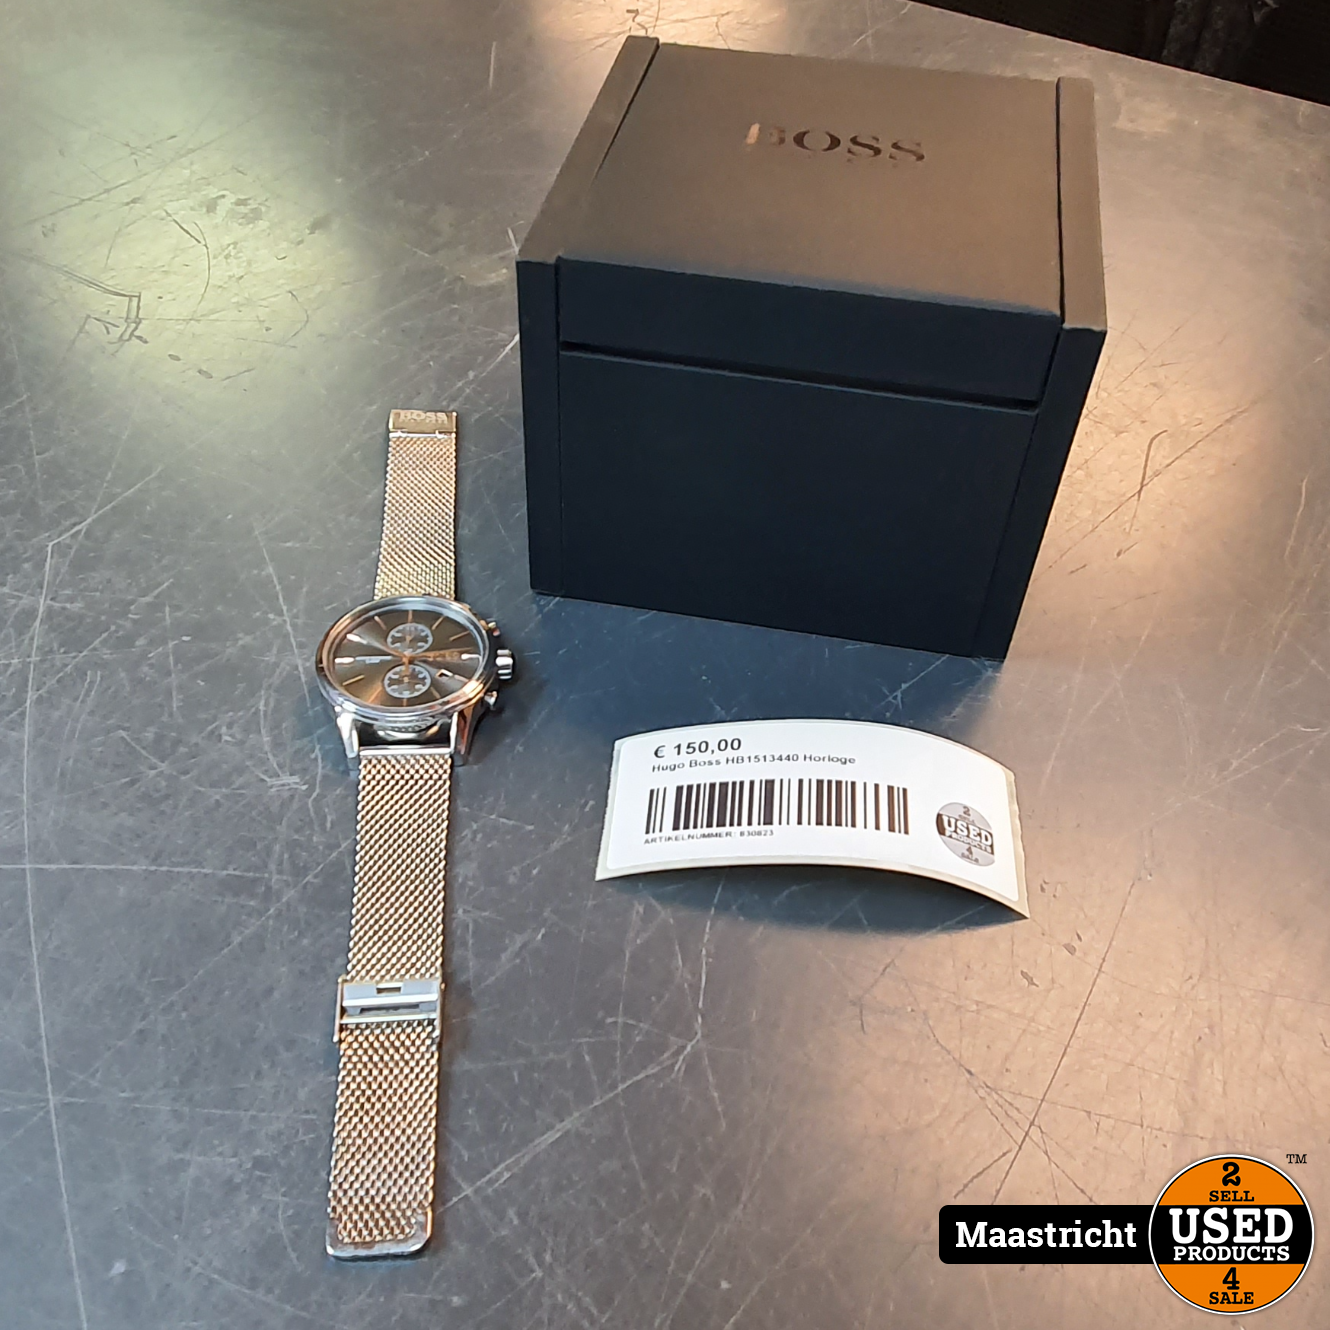 optellen tot nu bekennen boss Hugo Boss HB1513440 Horloge - Nette staat - - Used Products Maasstricht